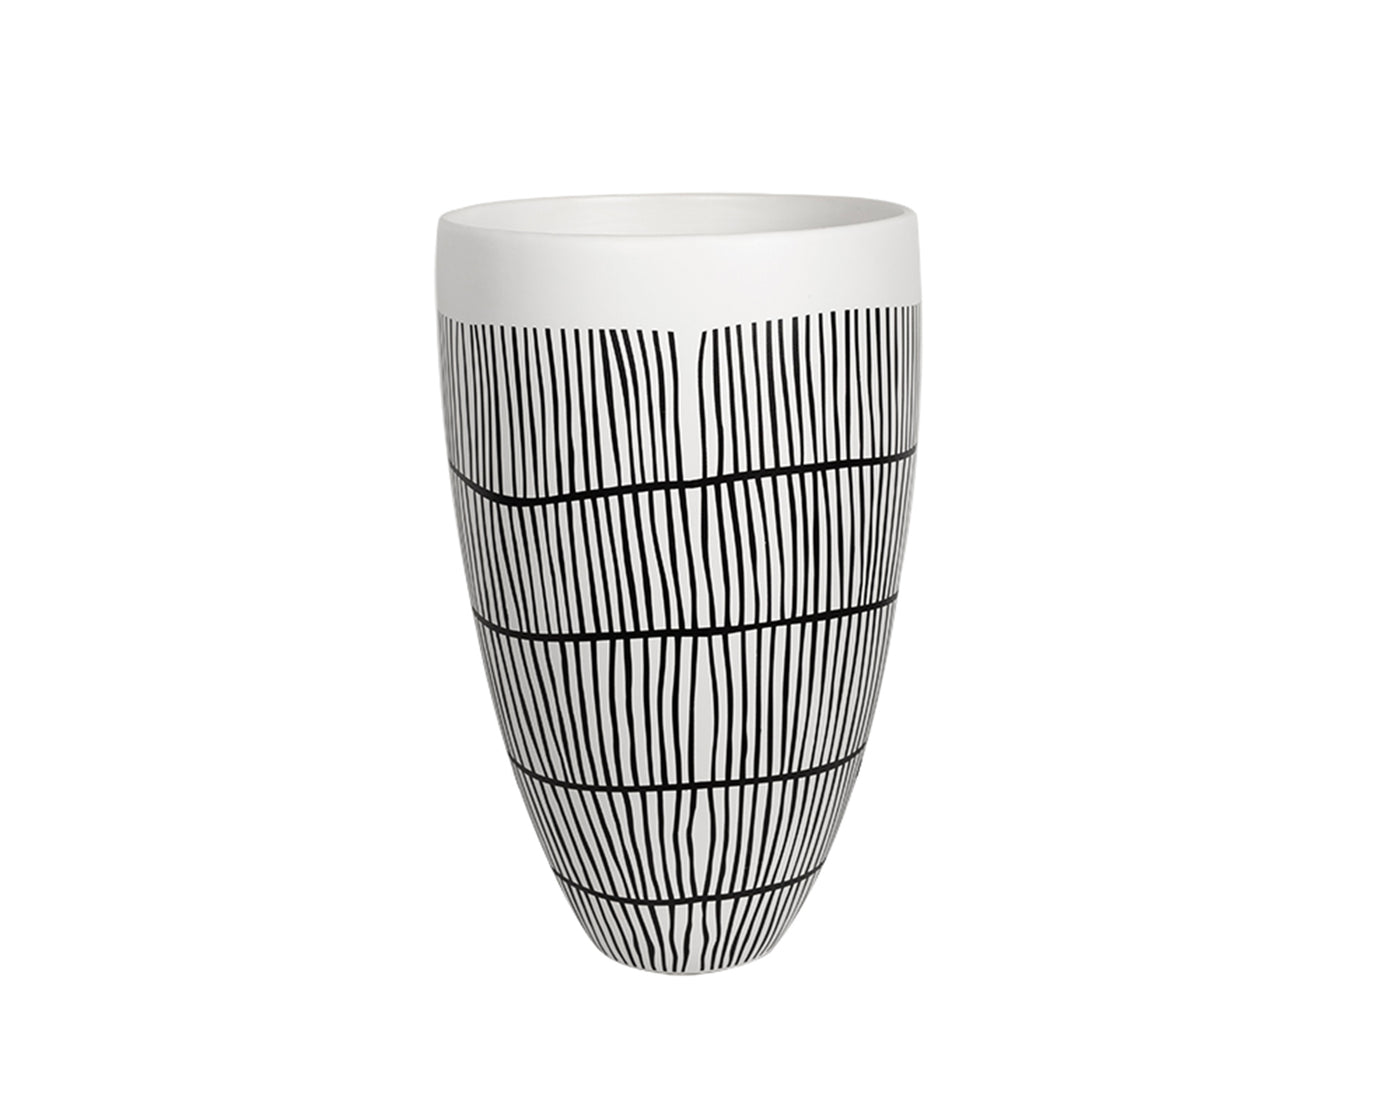 Ceramic Black and White Vase - Black Rim